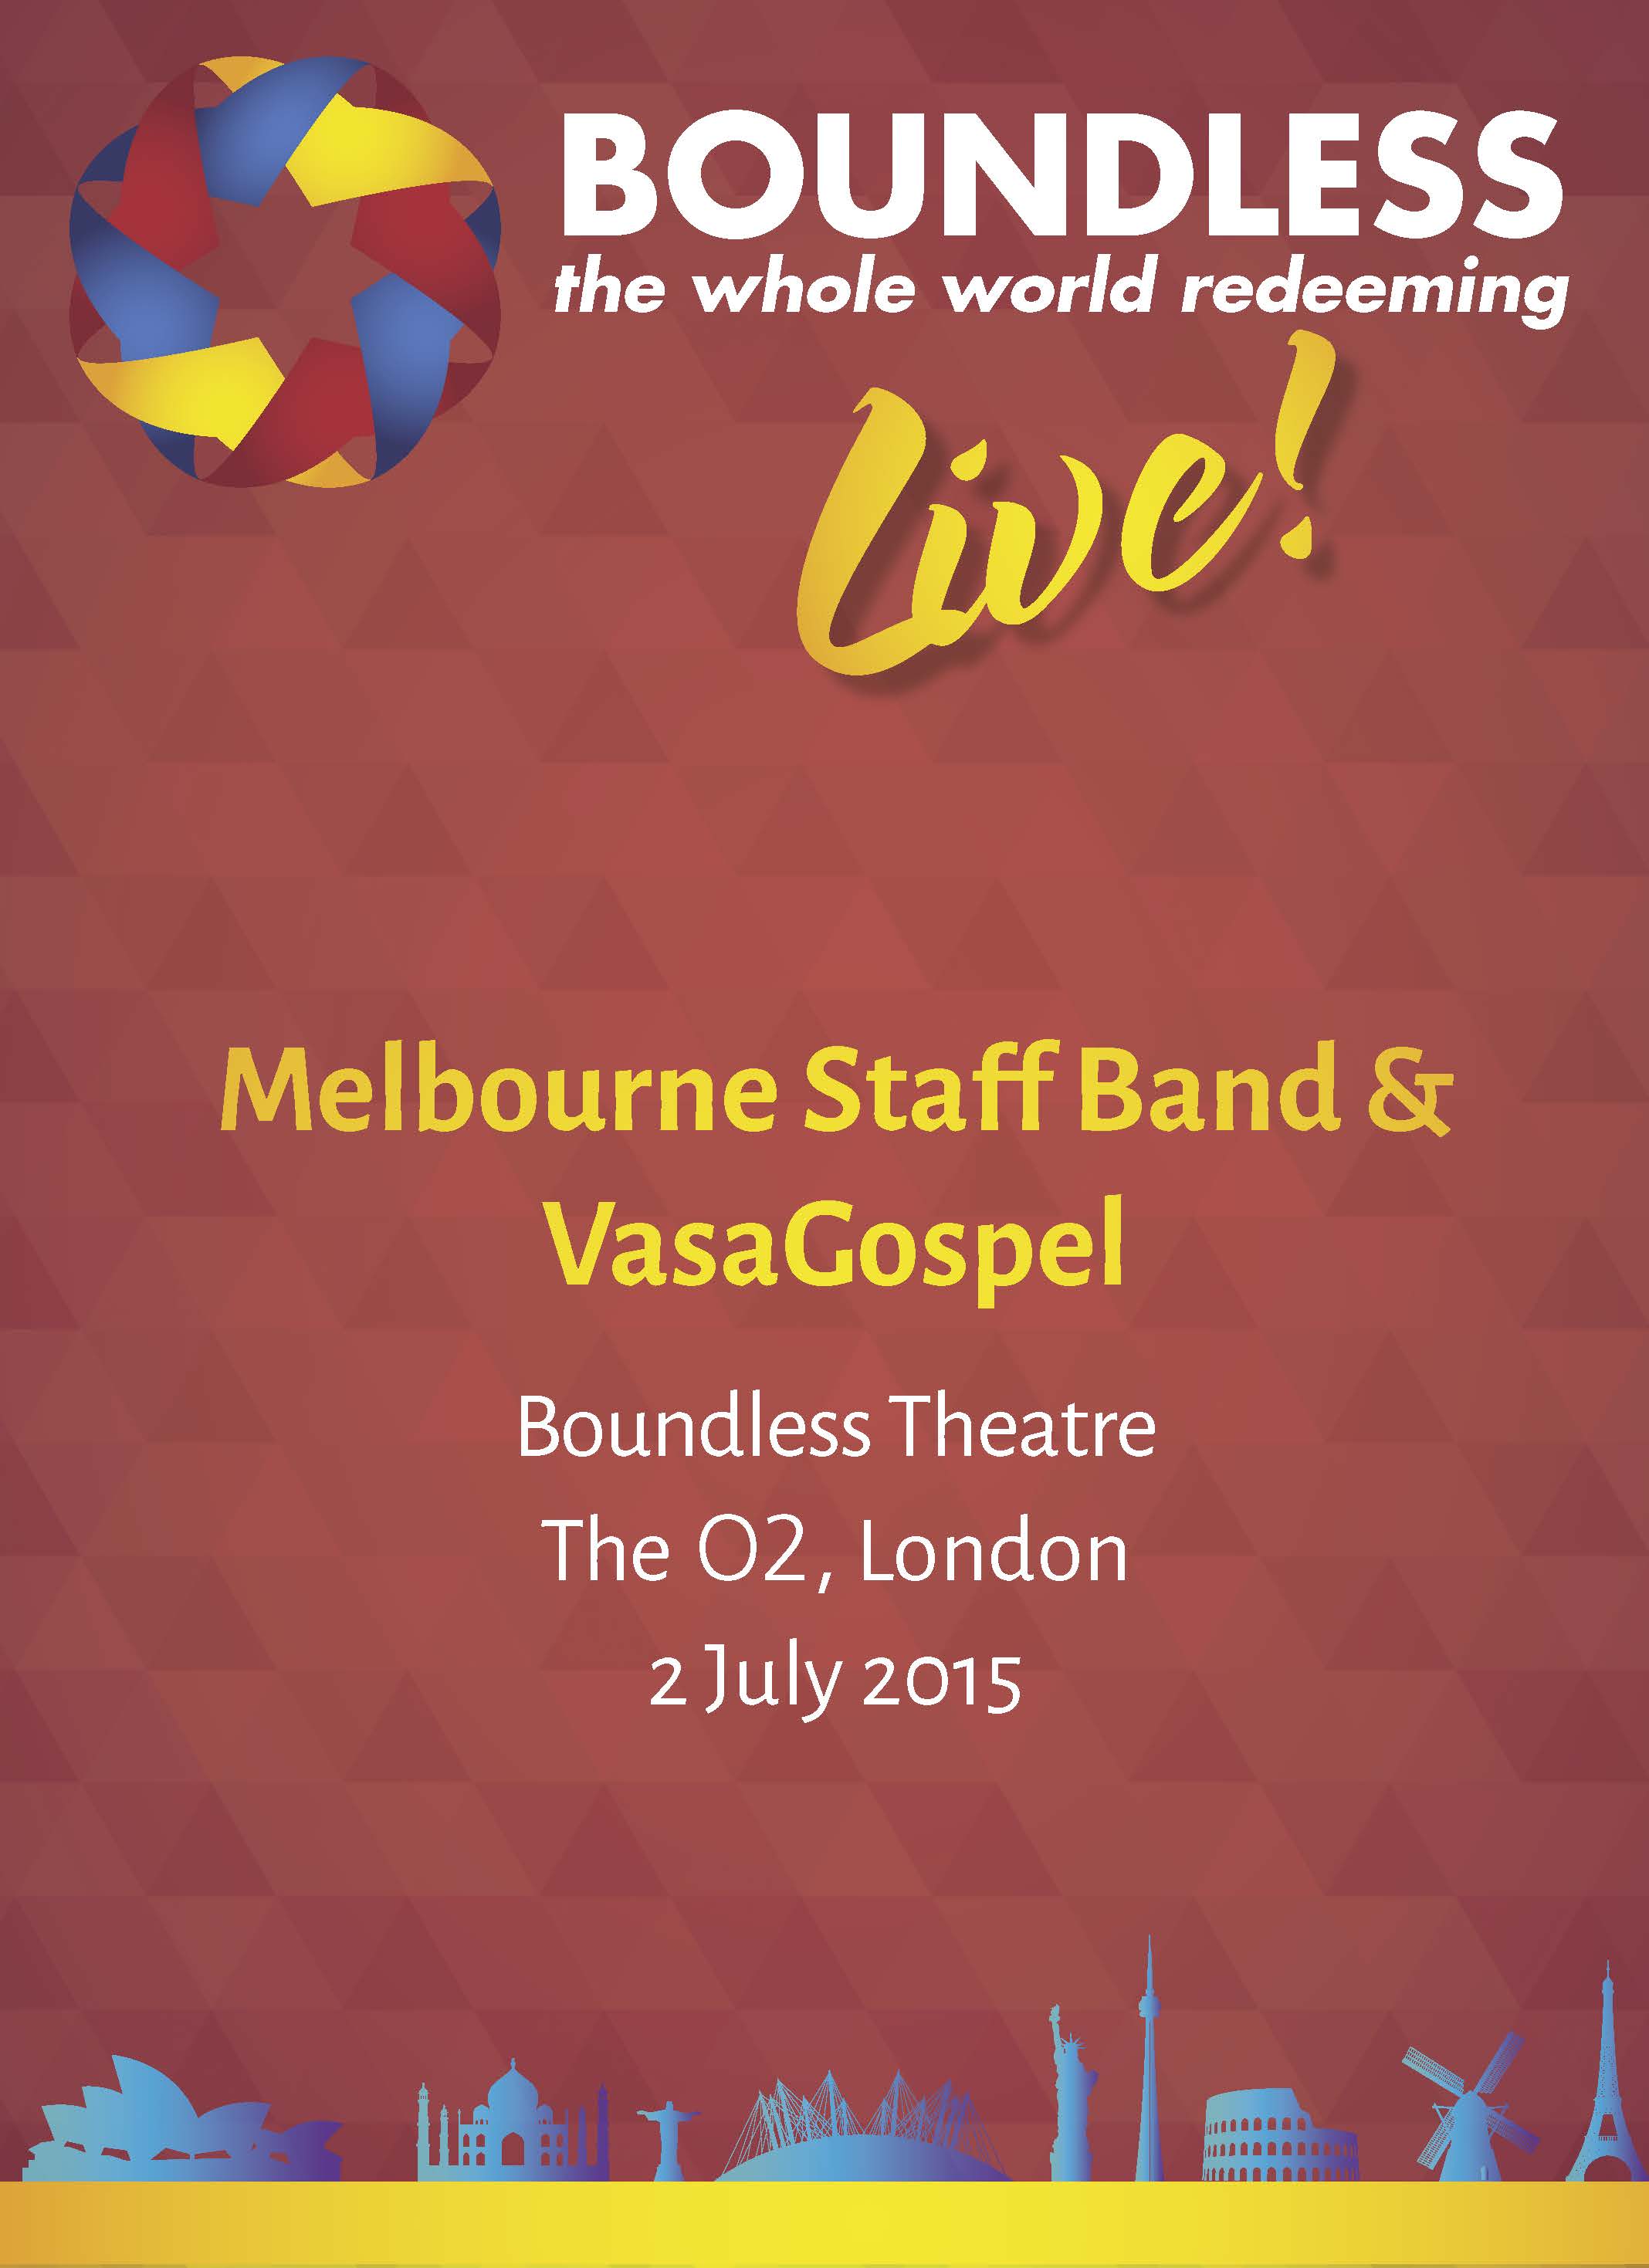 Boundless Live! Concert - Melbourne Staff Band and Vasa Gospel